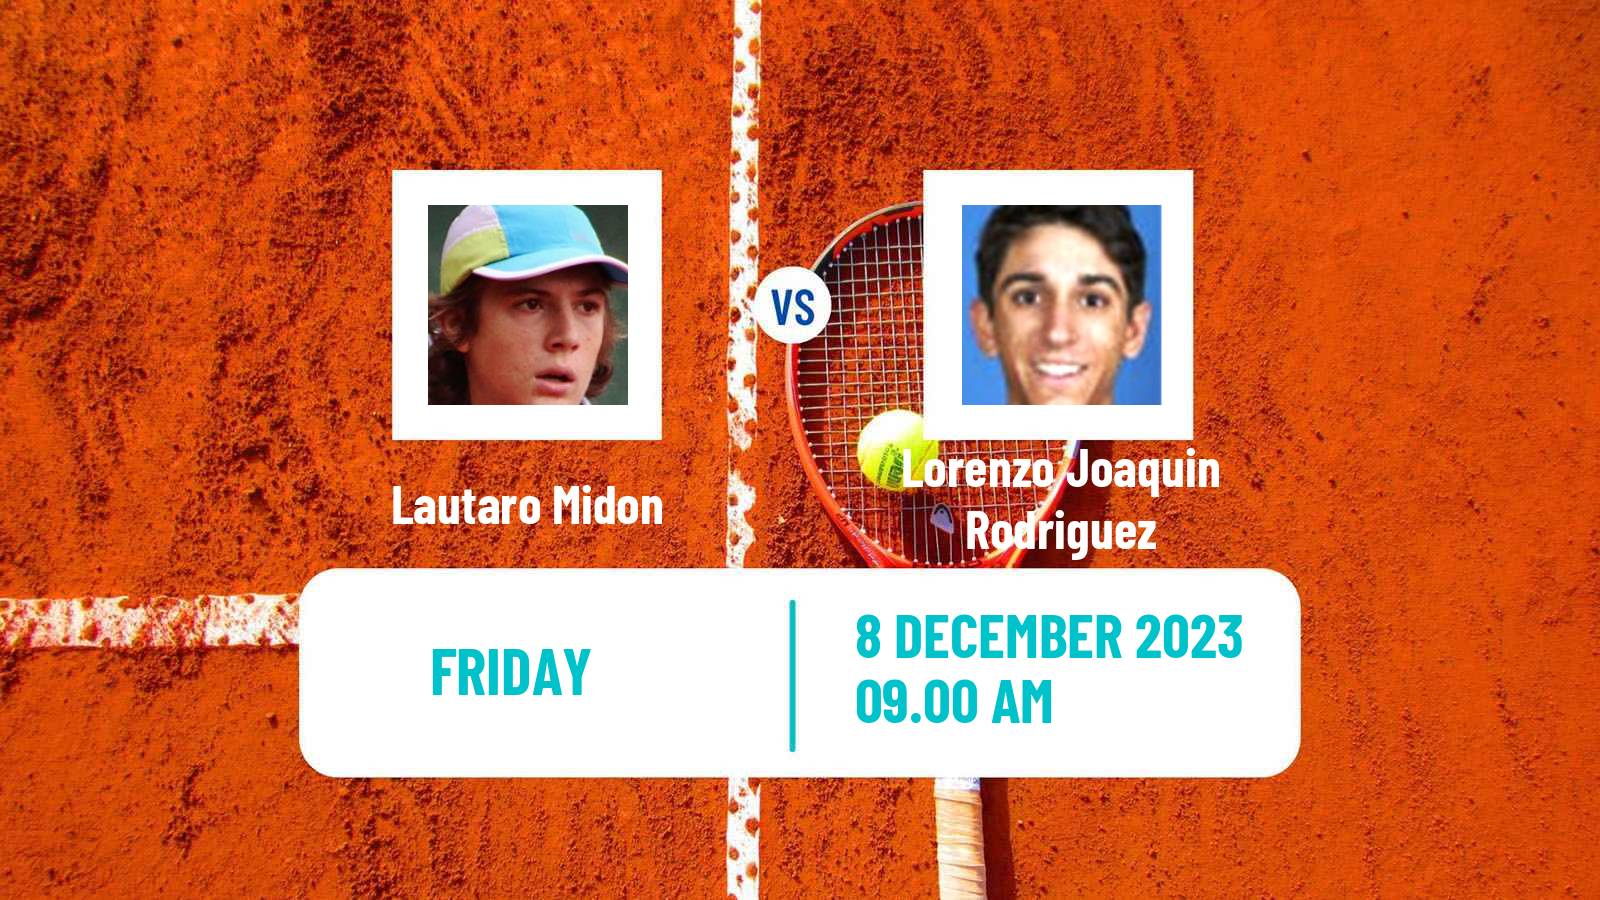 Tennis ITF M15 Concepcion Men Lautaro Midon - Lorenzo Joaquin Rodriguez